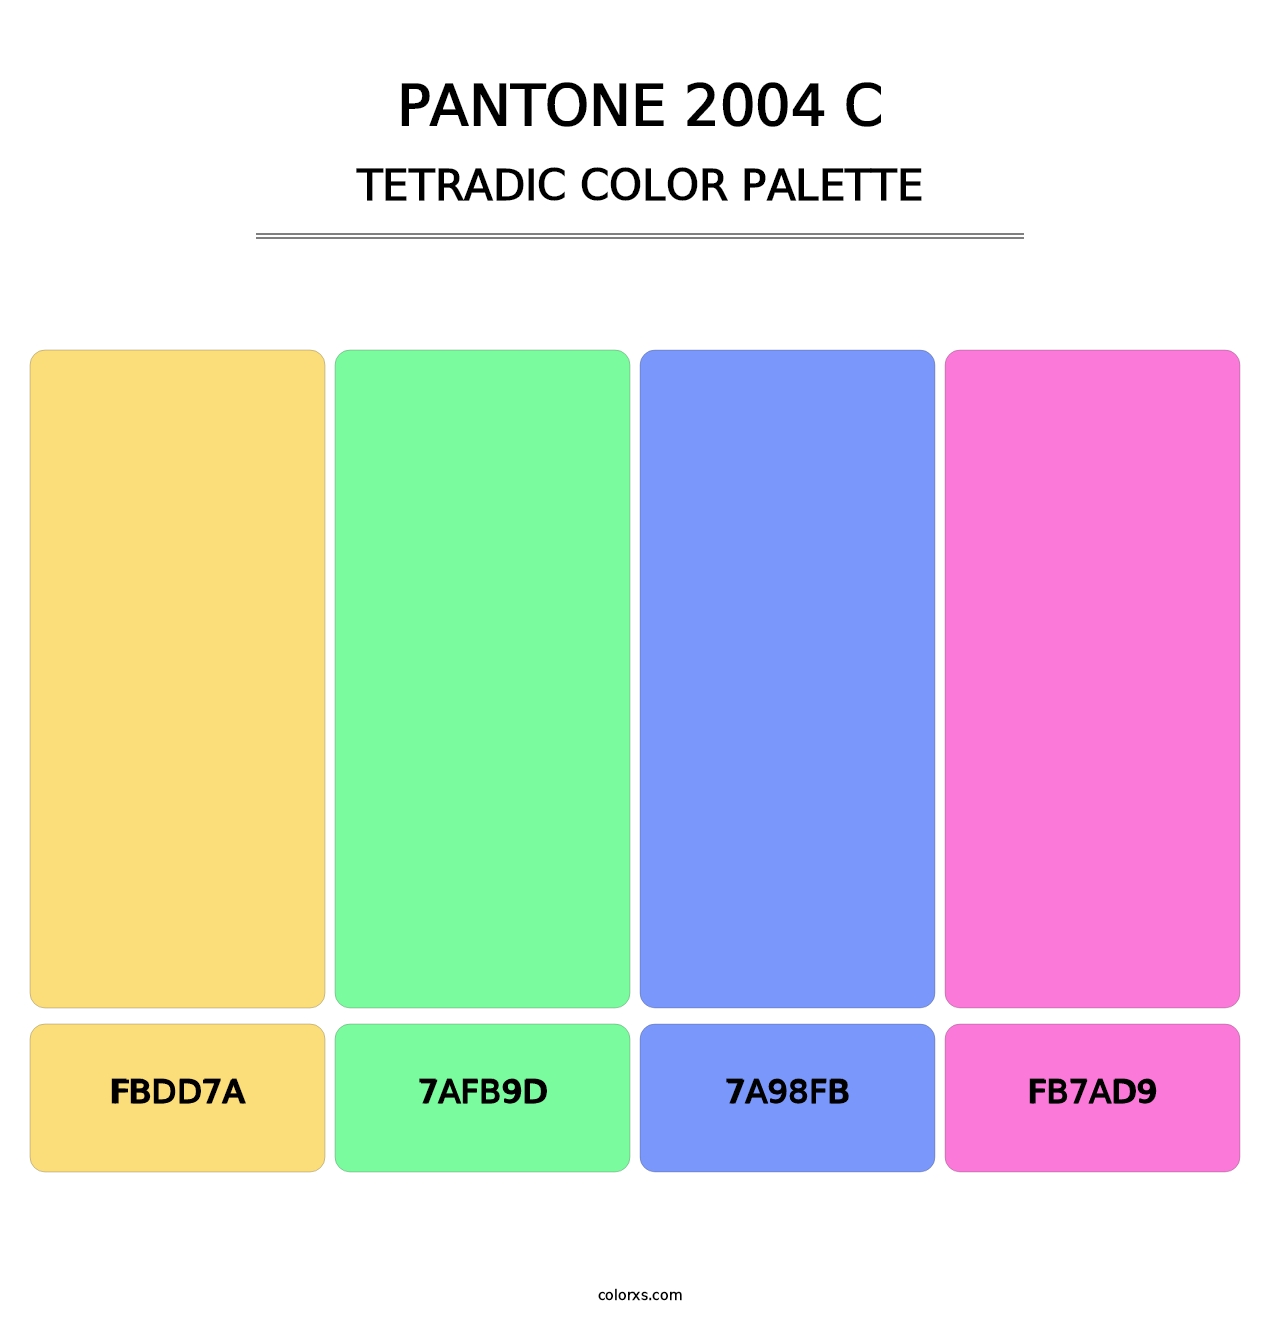 PANTONE 2004 C - Tetradic Color Palette